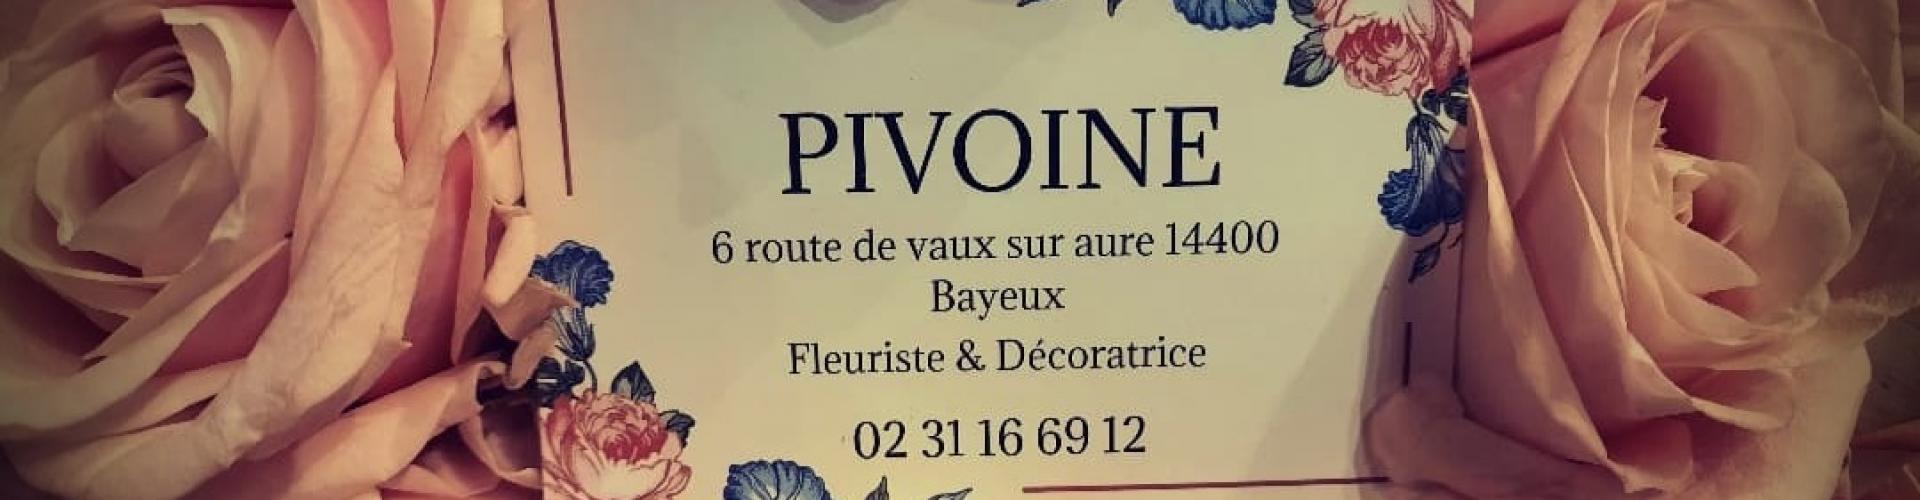 Pivoine - Fleuriste éco-responsable sur mesure (Bayeux, Calvados) - Prestataire de Mariage en Normandie